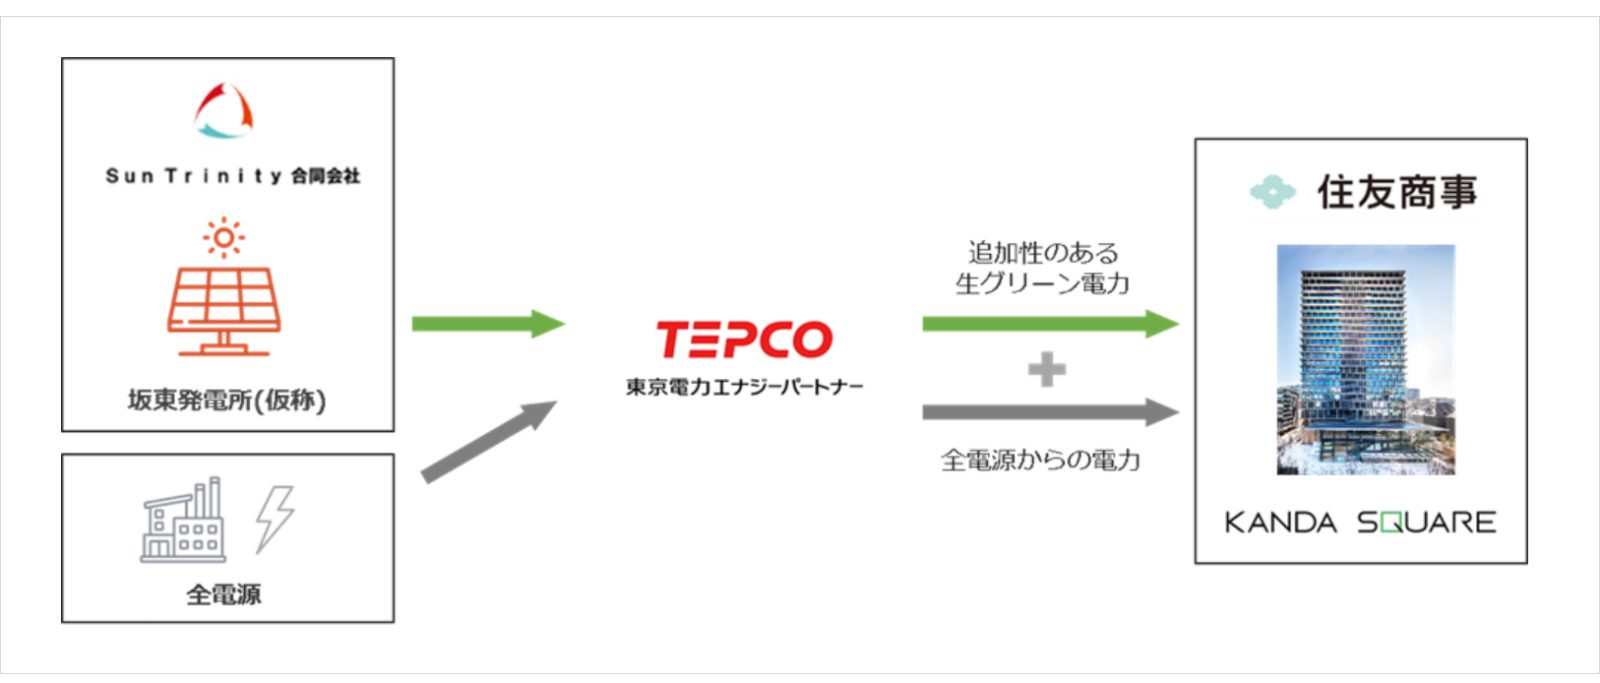 Sun Trinity-住友商社-KANDA SQUARE-綠電-綠電採購-再生能源-日本-Japan